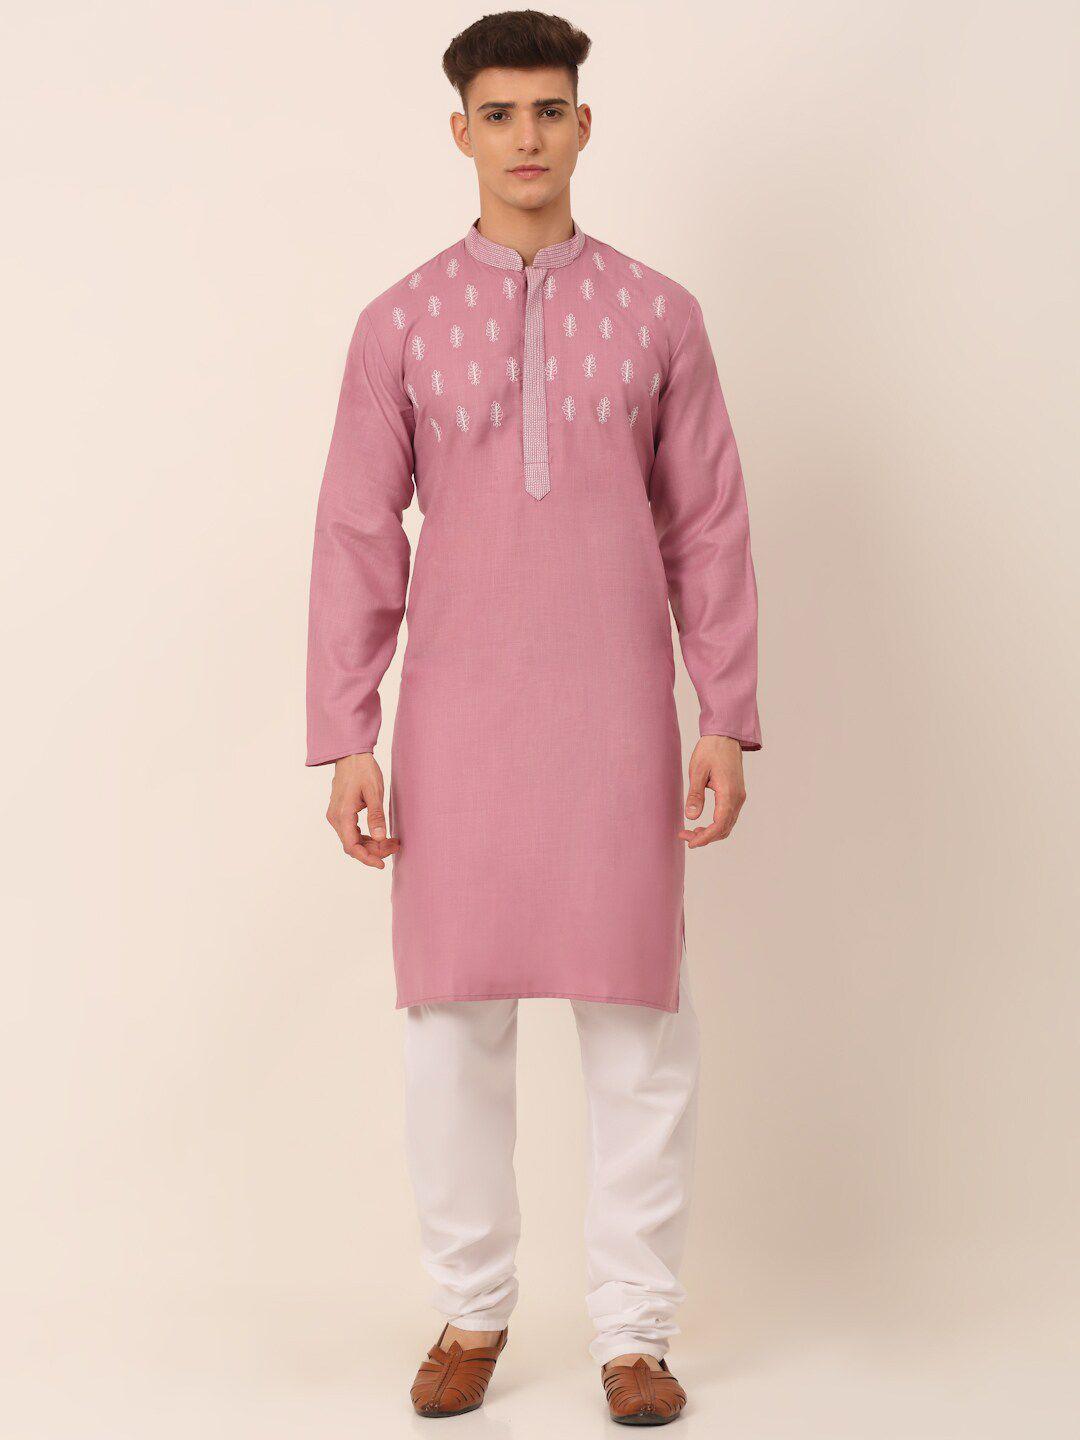 jompers men pink & white floral thread work pure cotton kurta with pyjamas